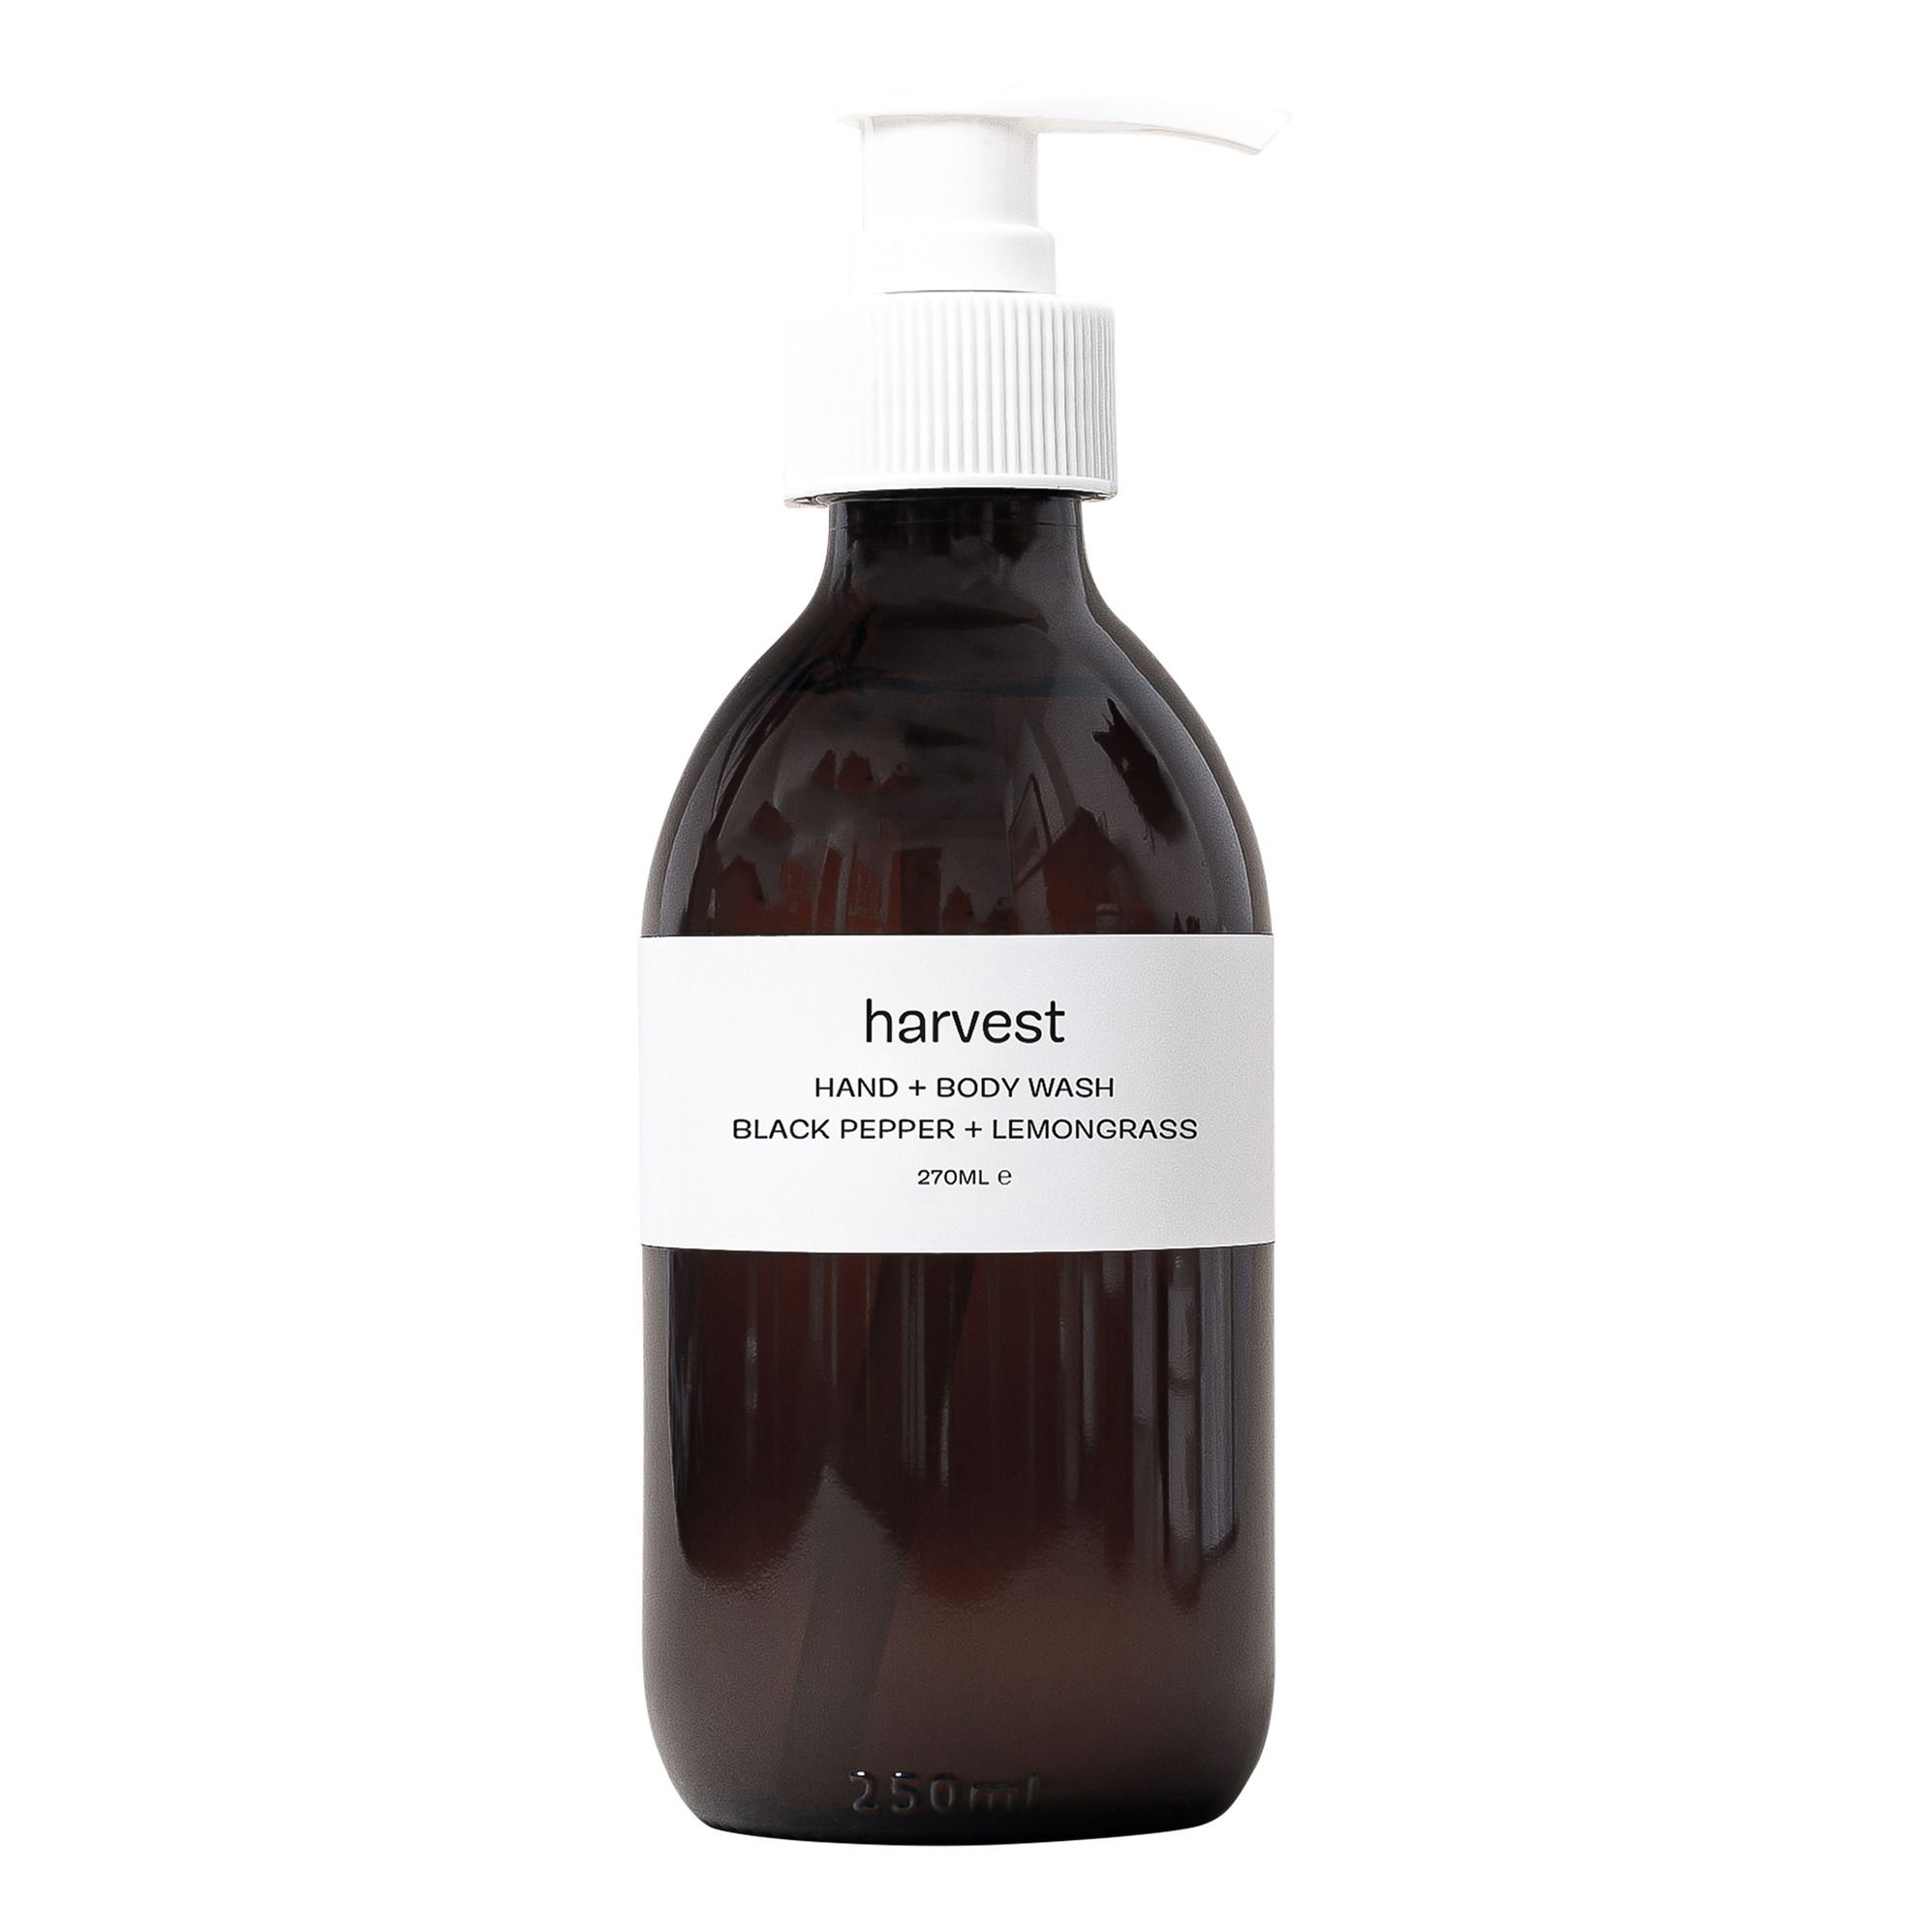 Harvest Skincare - Savon liquide pour main et corps, Black pepper Lemongrass - 270 ml - Transparent